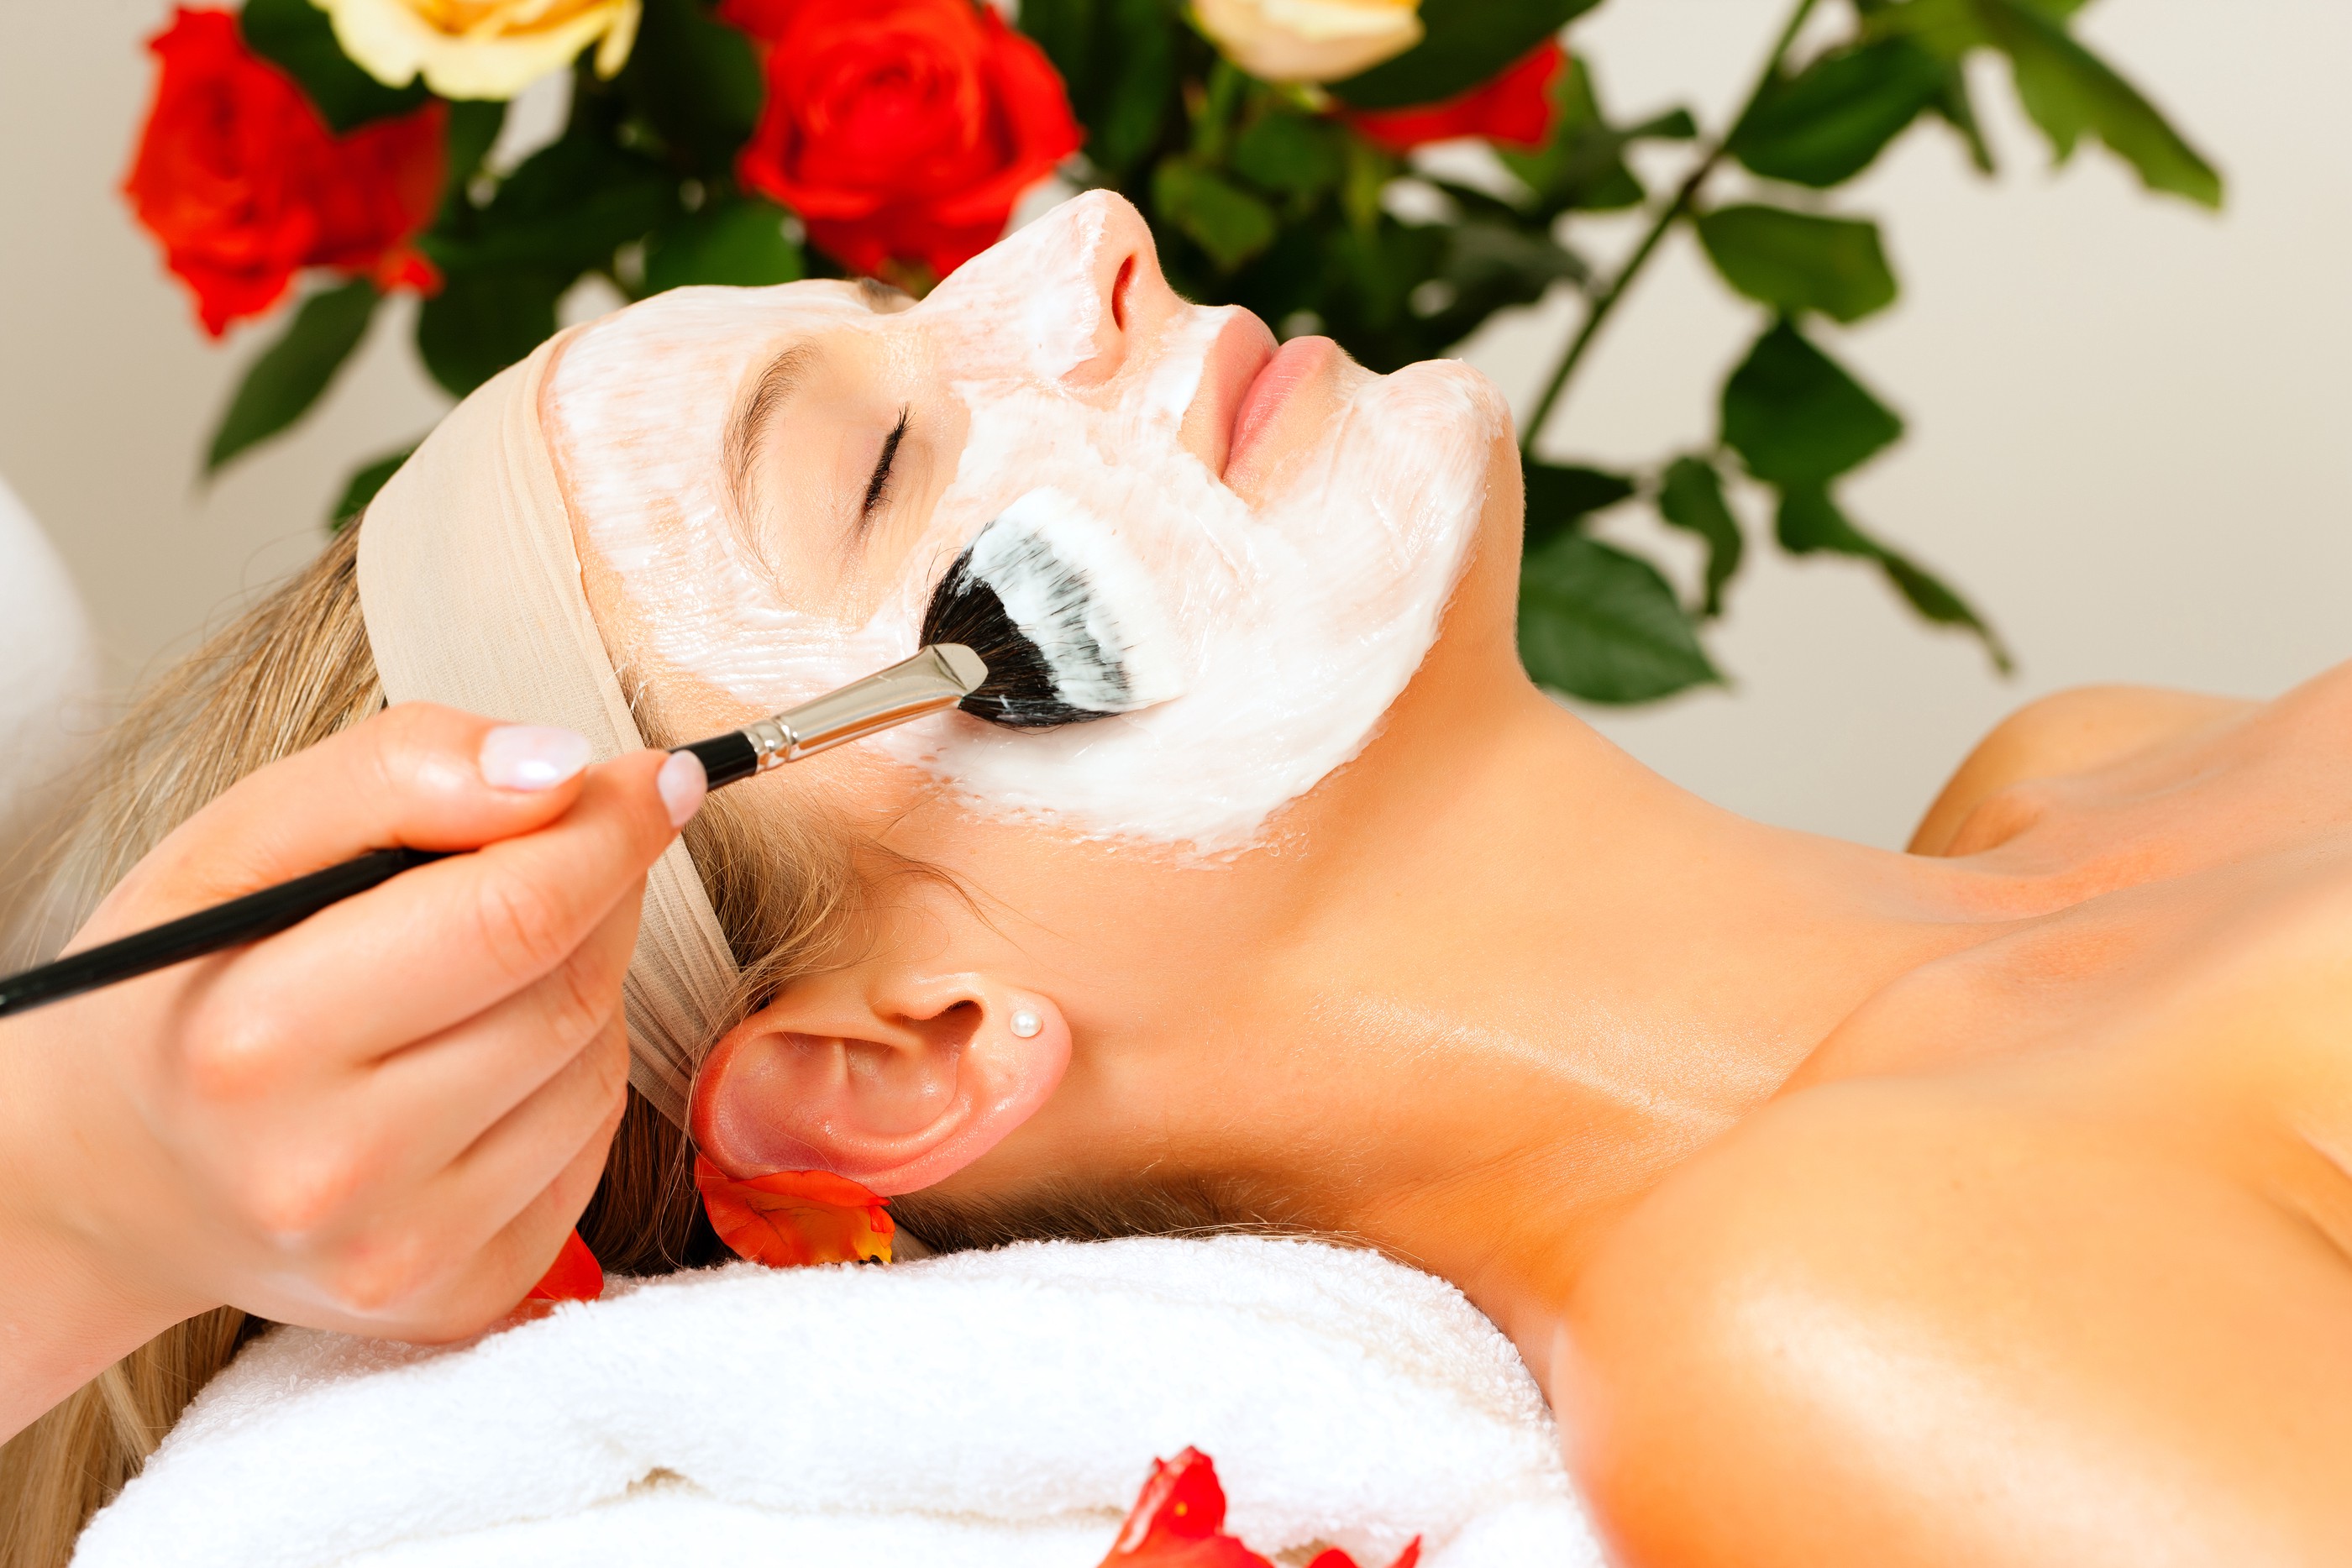 Skin care courses